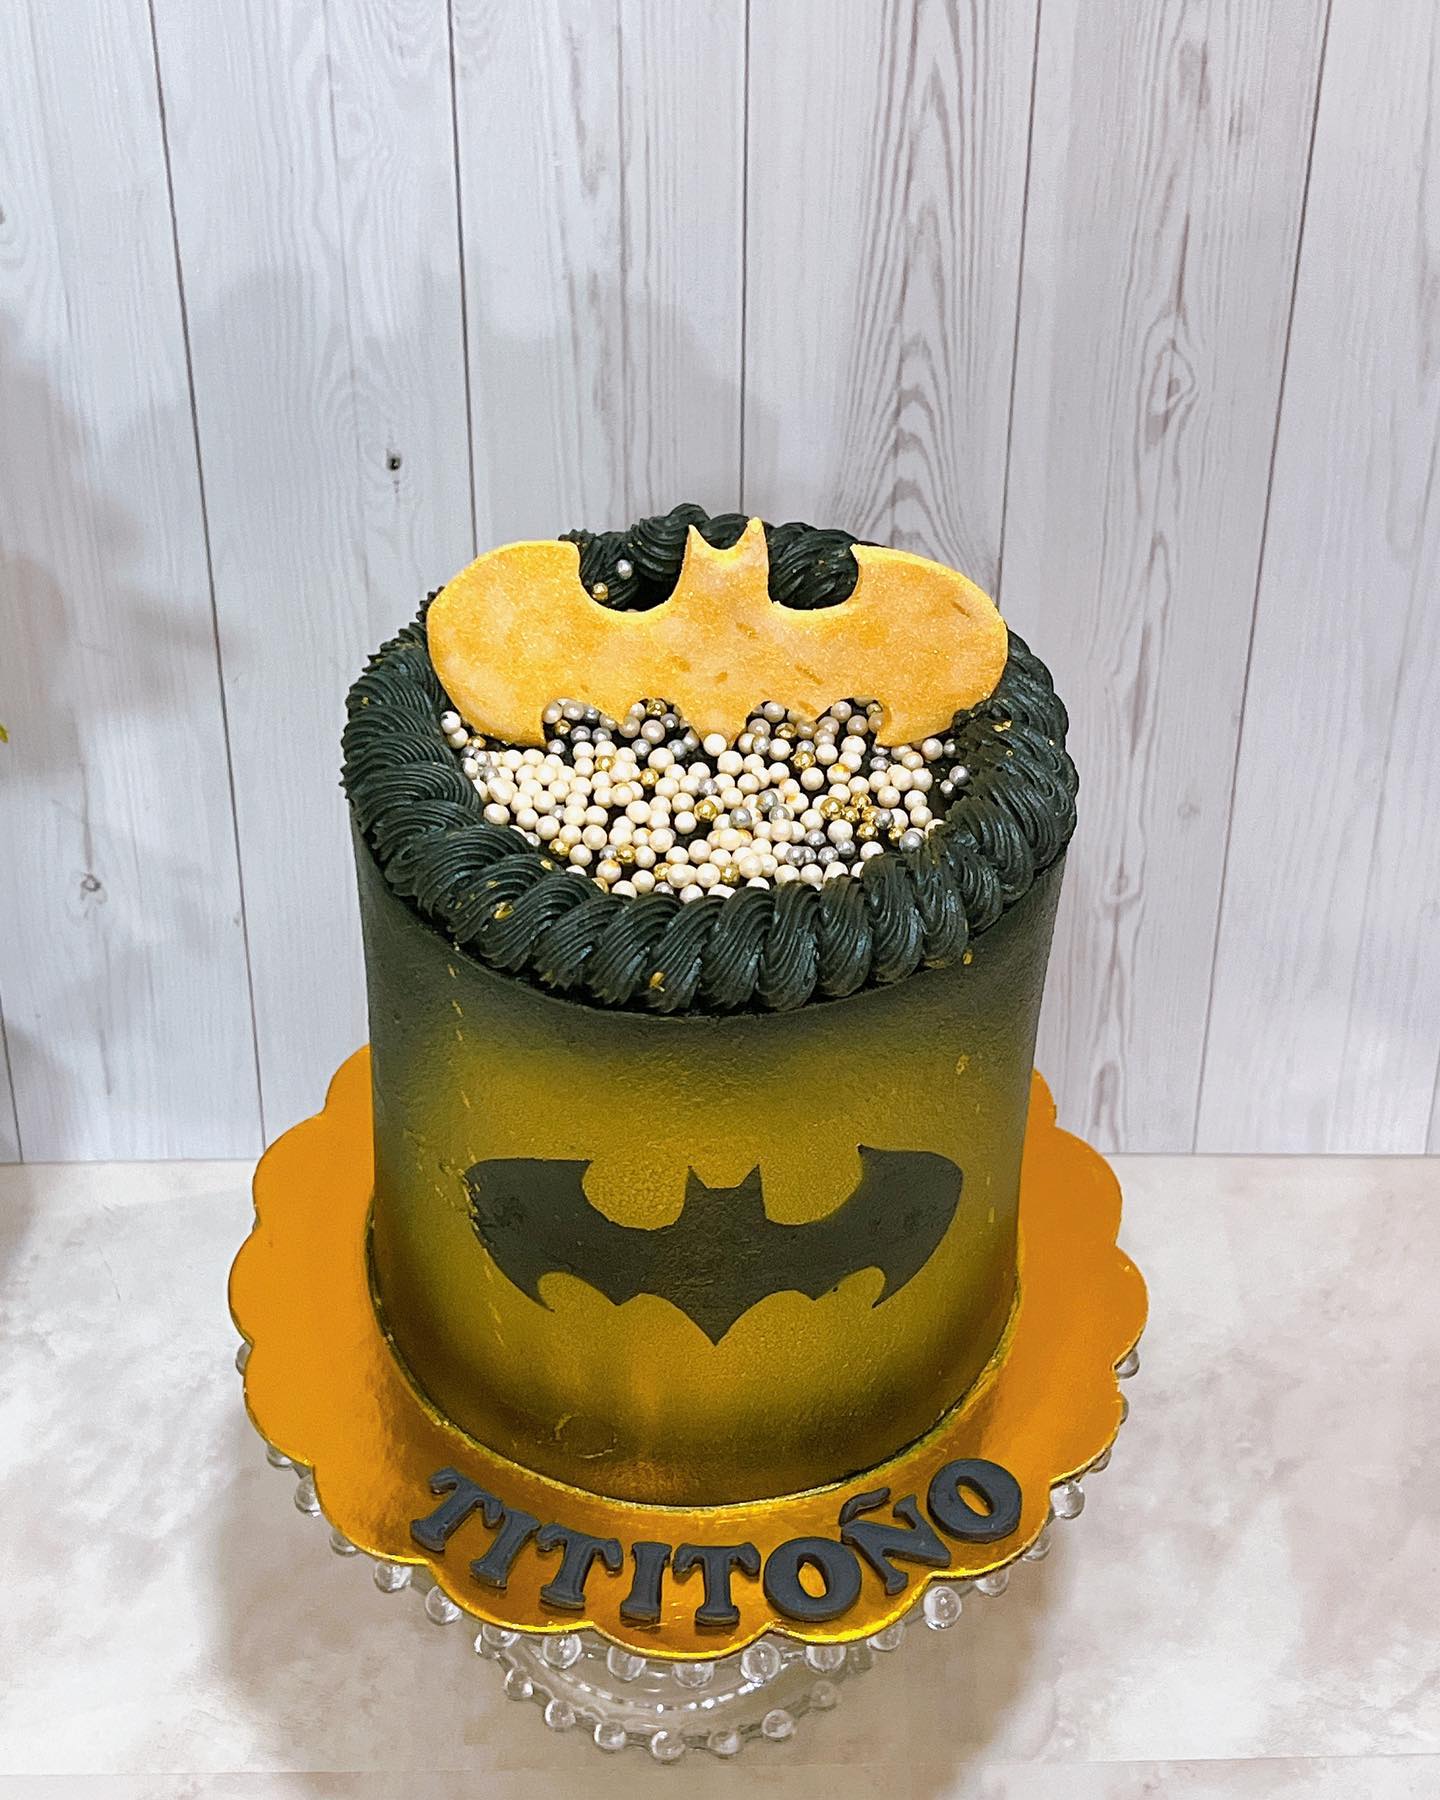 Lego Batman cake | Batman birthday cakes, Lego batman birthday cake, Lego  batman birthday